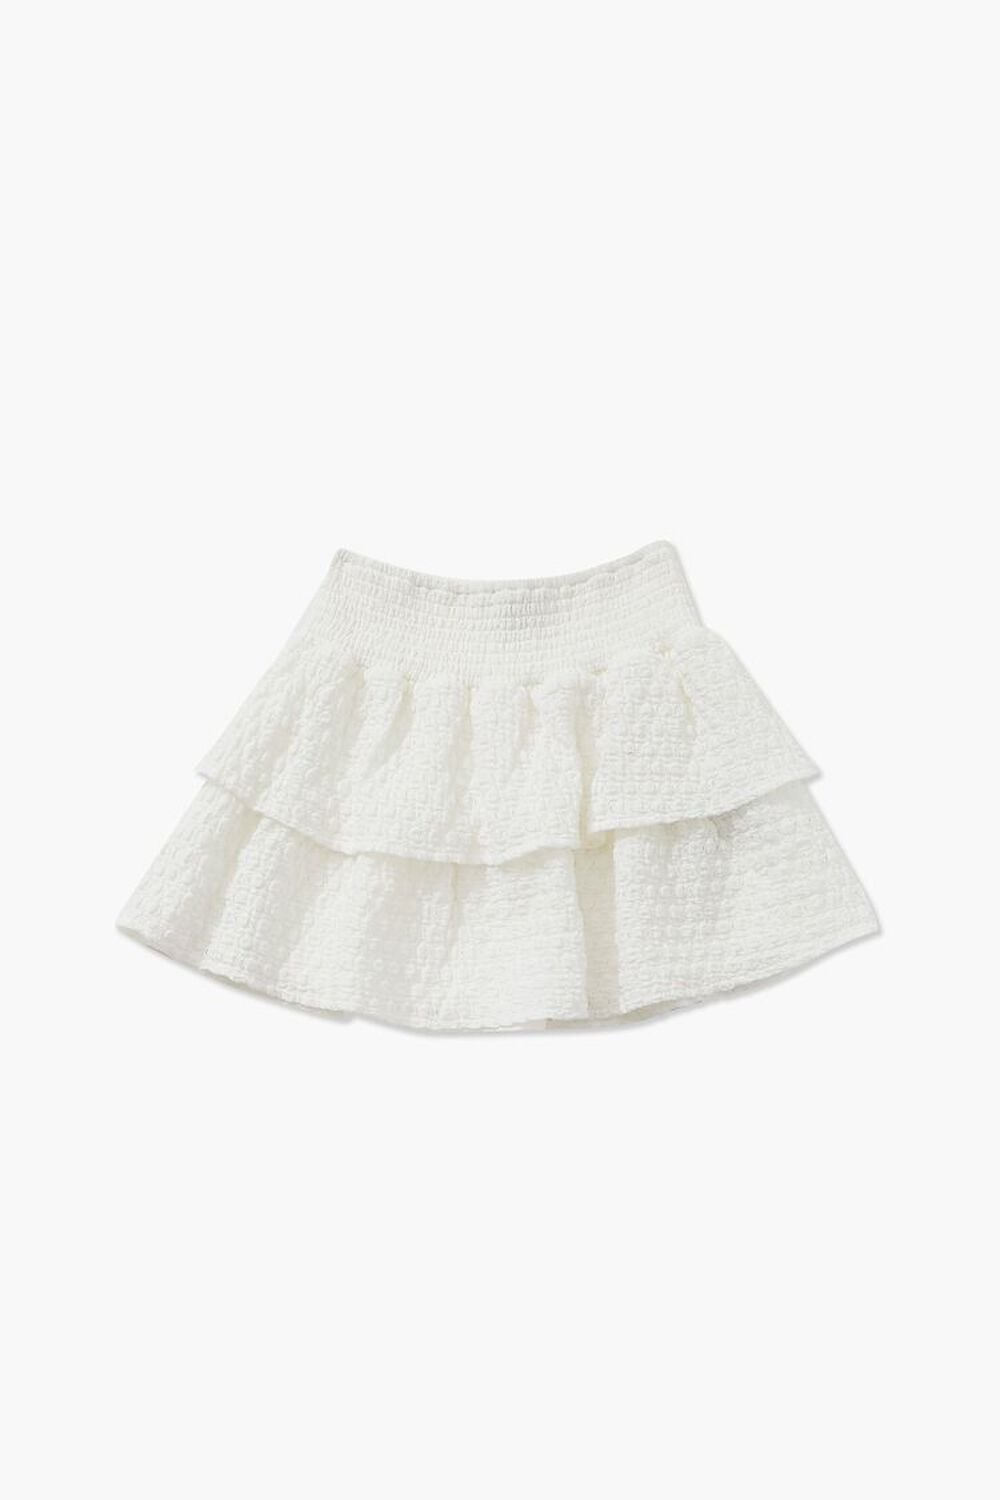 WHITE Girls Tiered Flounce Skirt (Kids), image 1